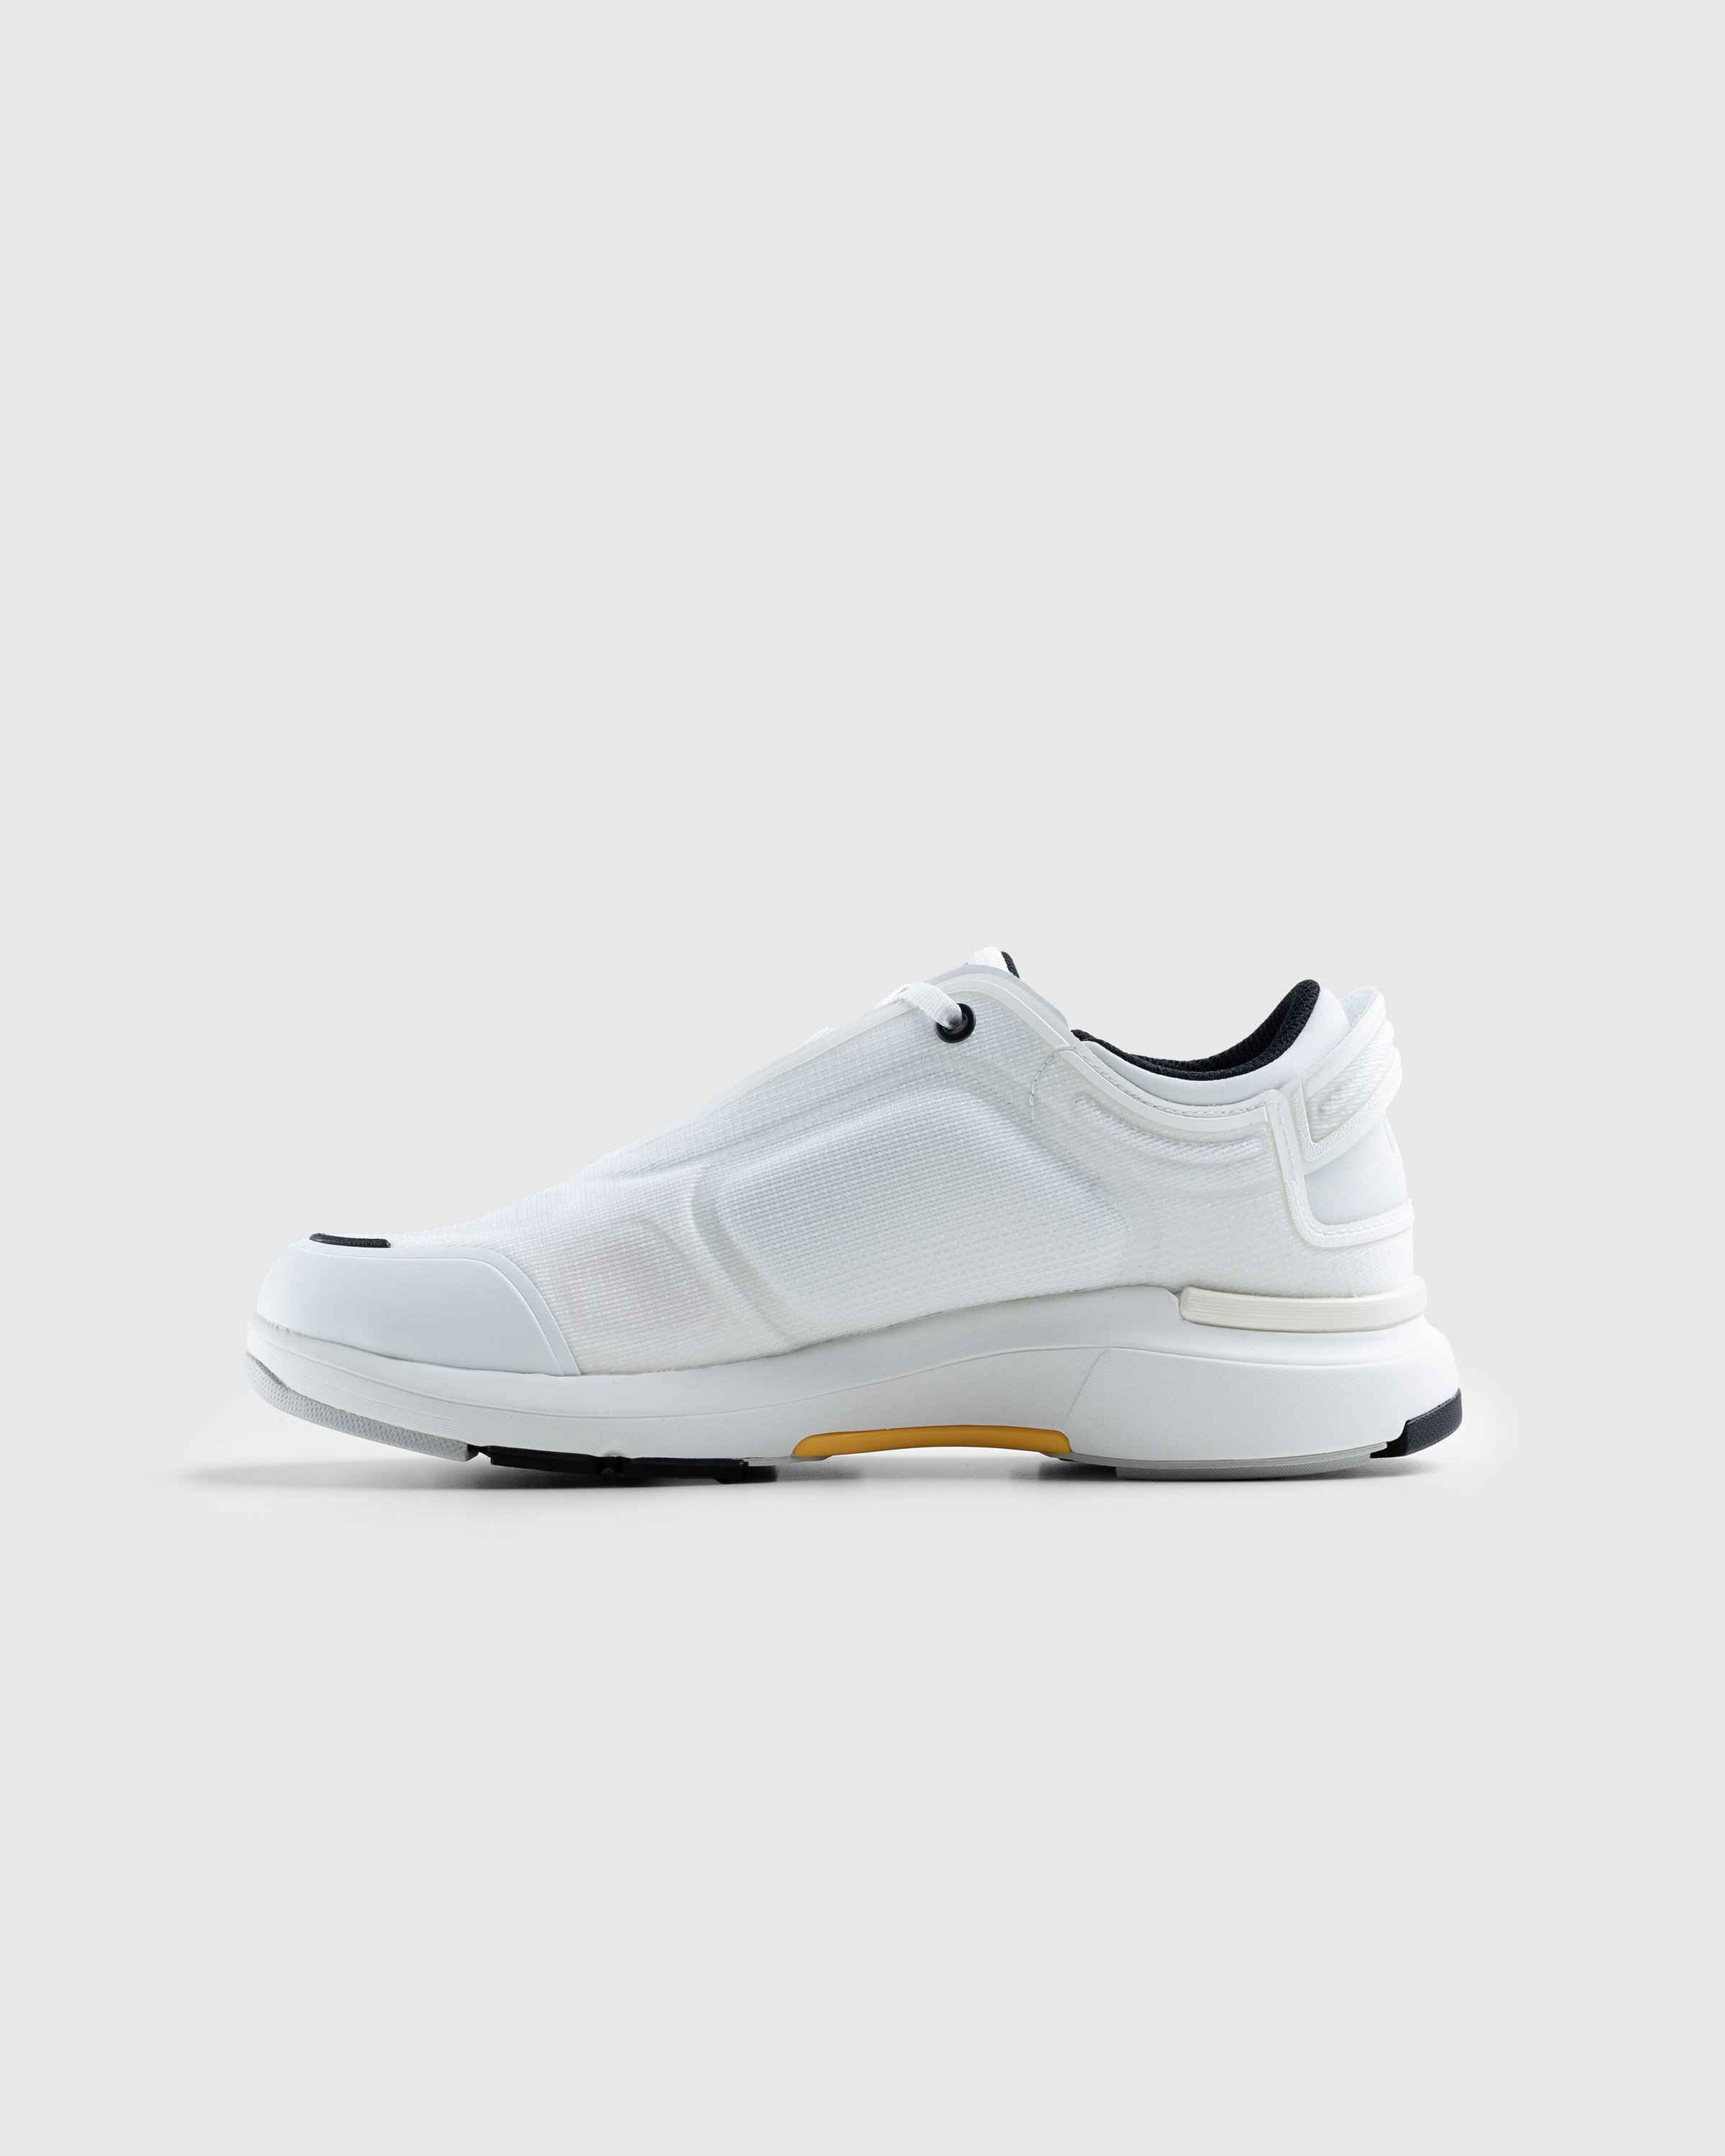 Athletics Footwear - One White - Footwear - White - Image 2